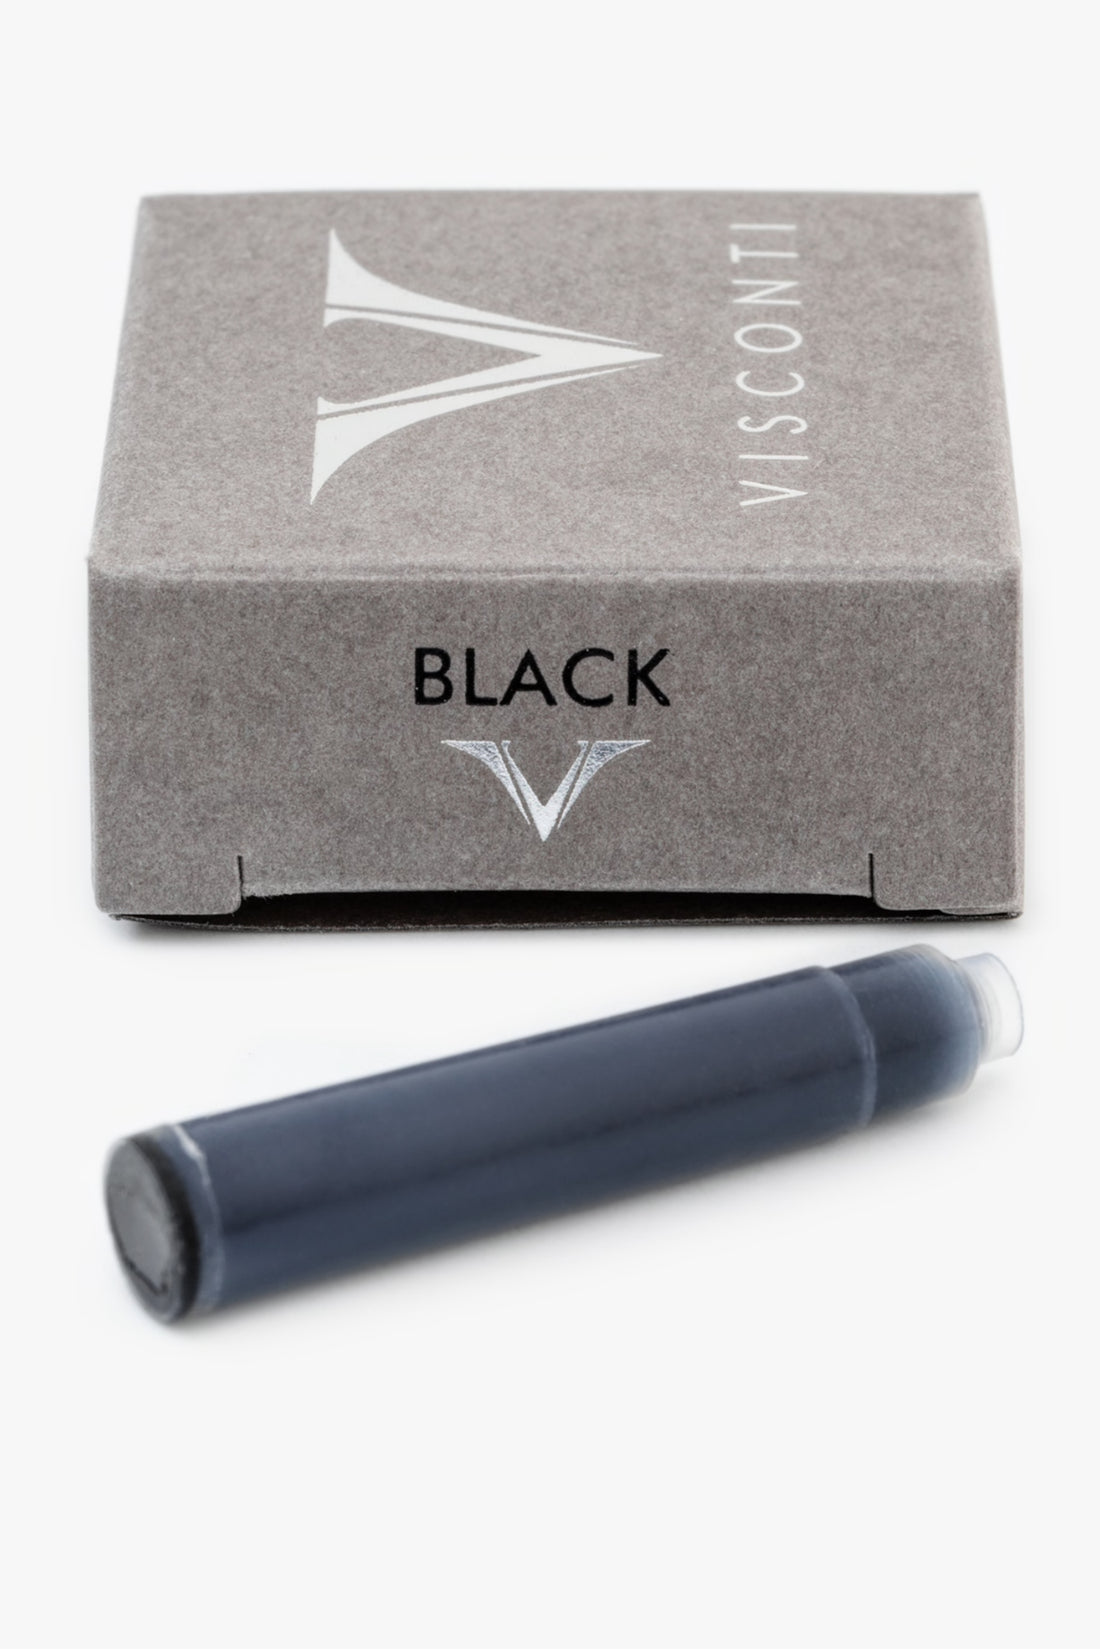 Visconti Black Ink Cartridges. Standard International Short - box of 10